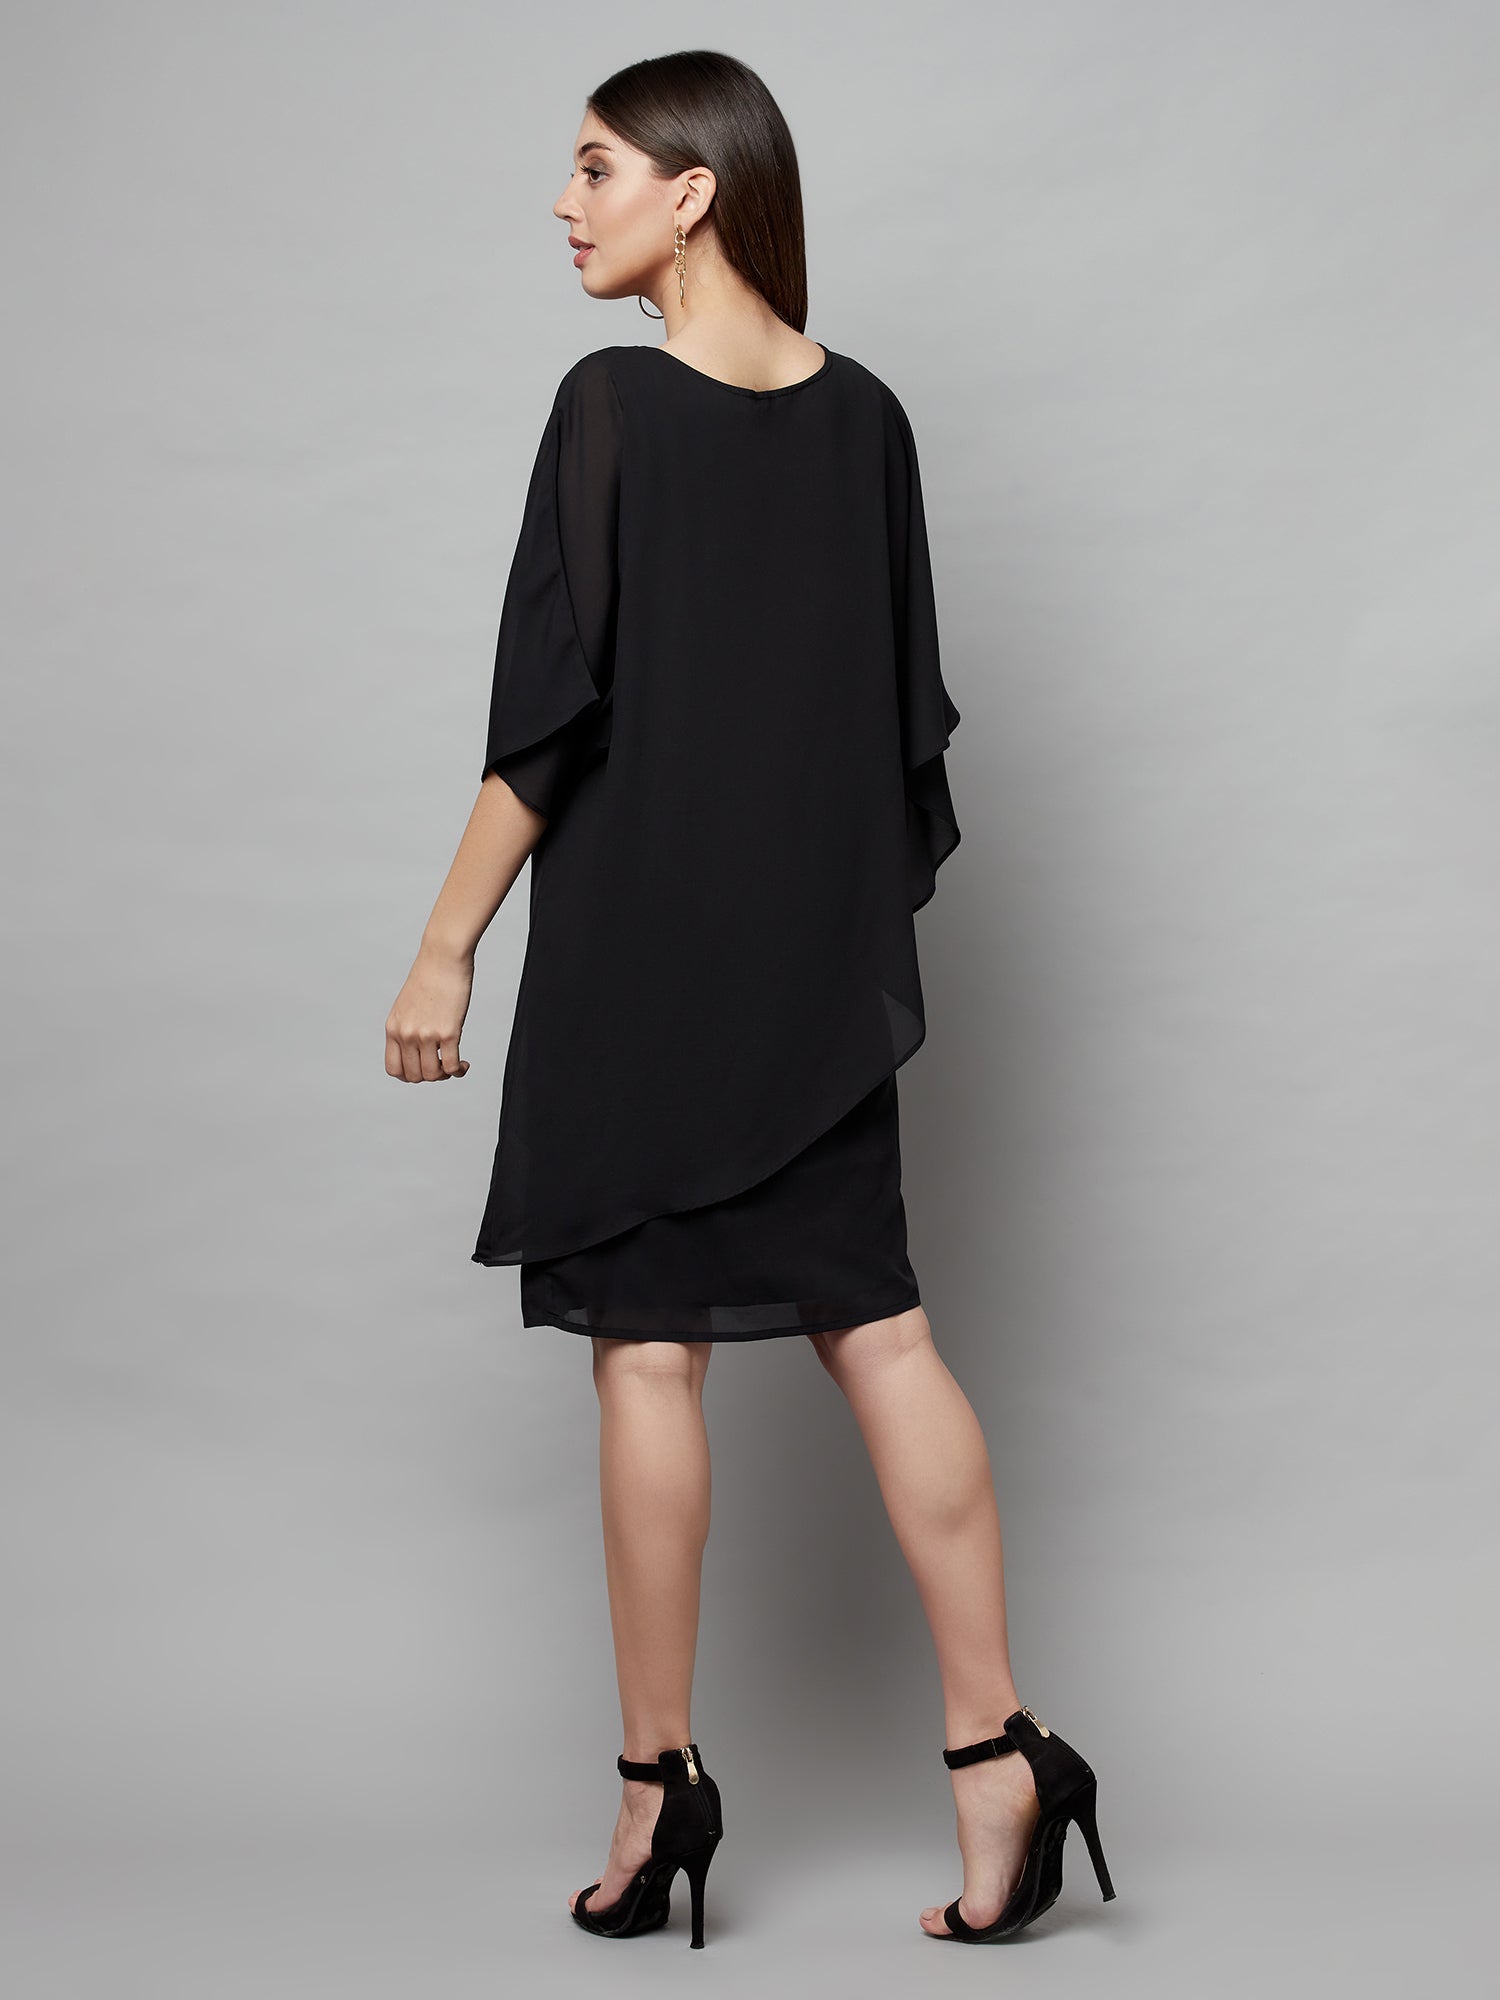 popover black dress with neck embellishment